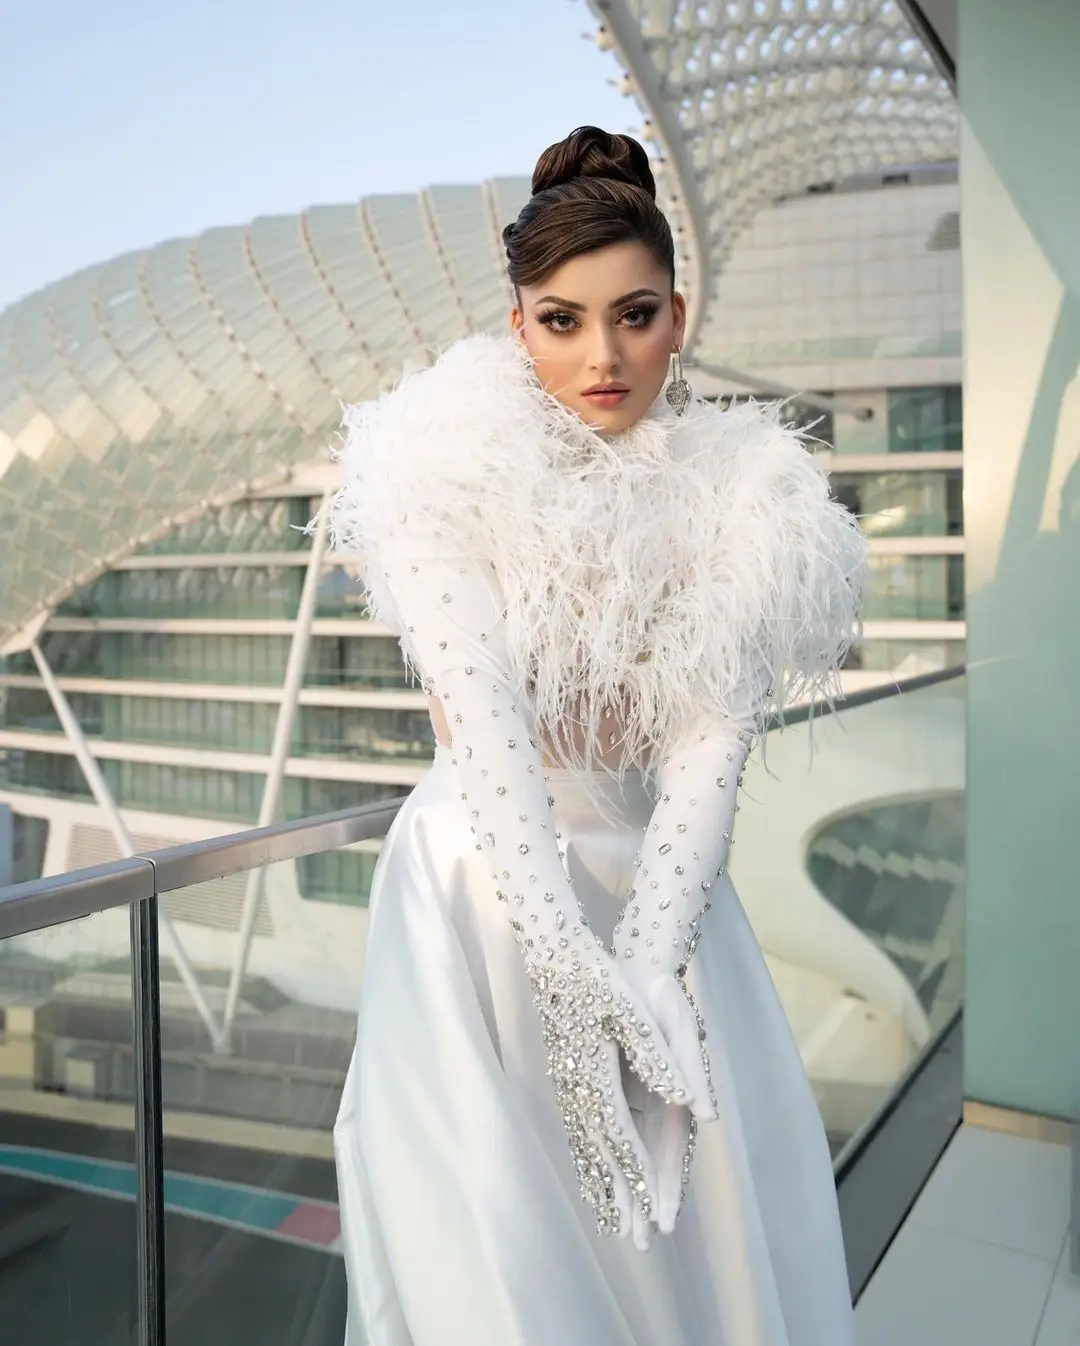 Urvashi Rautela Stunning Looks in White Dress at IIFA Awards Event Dubai 